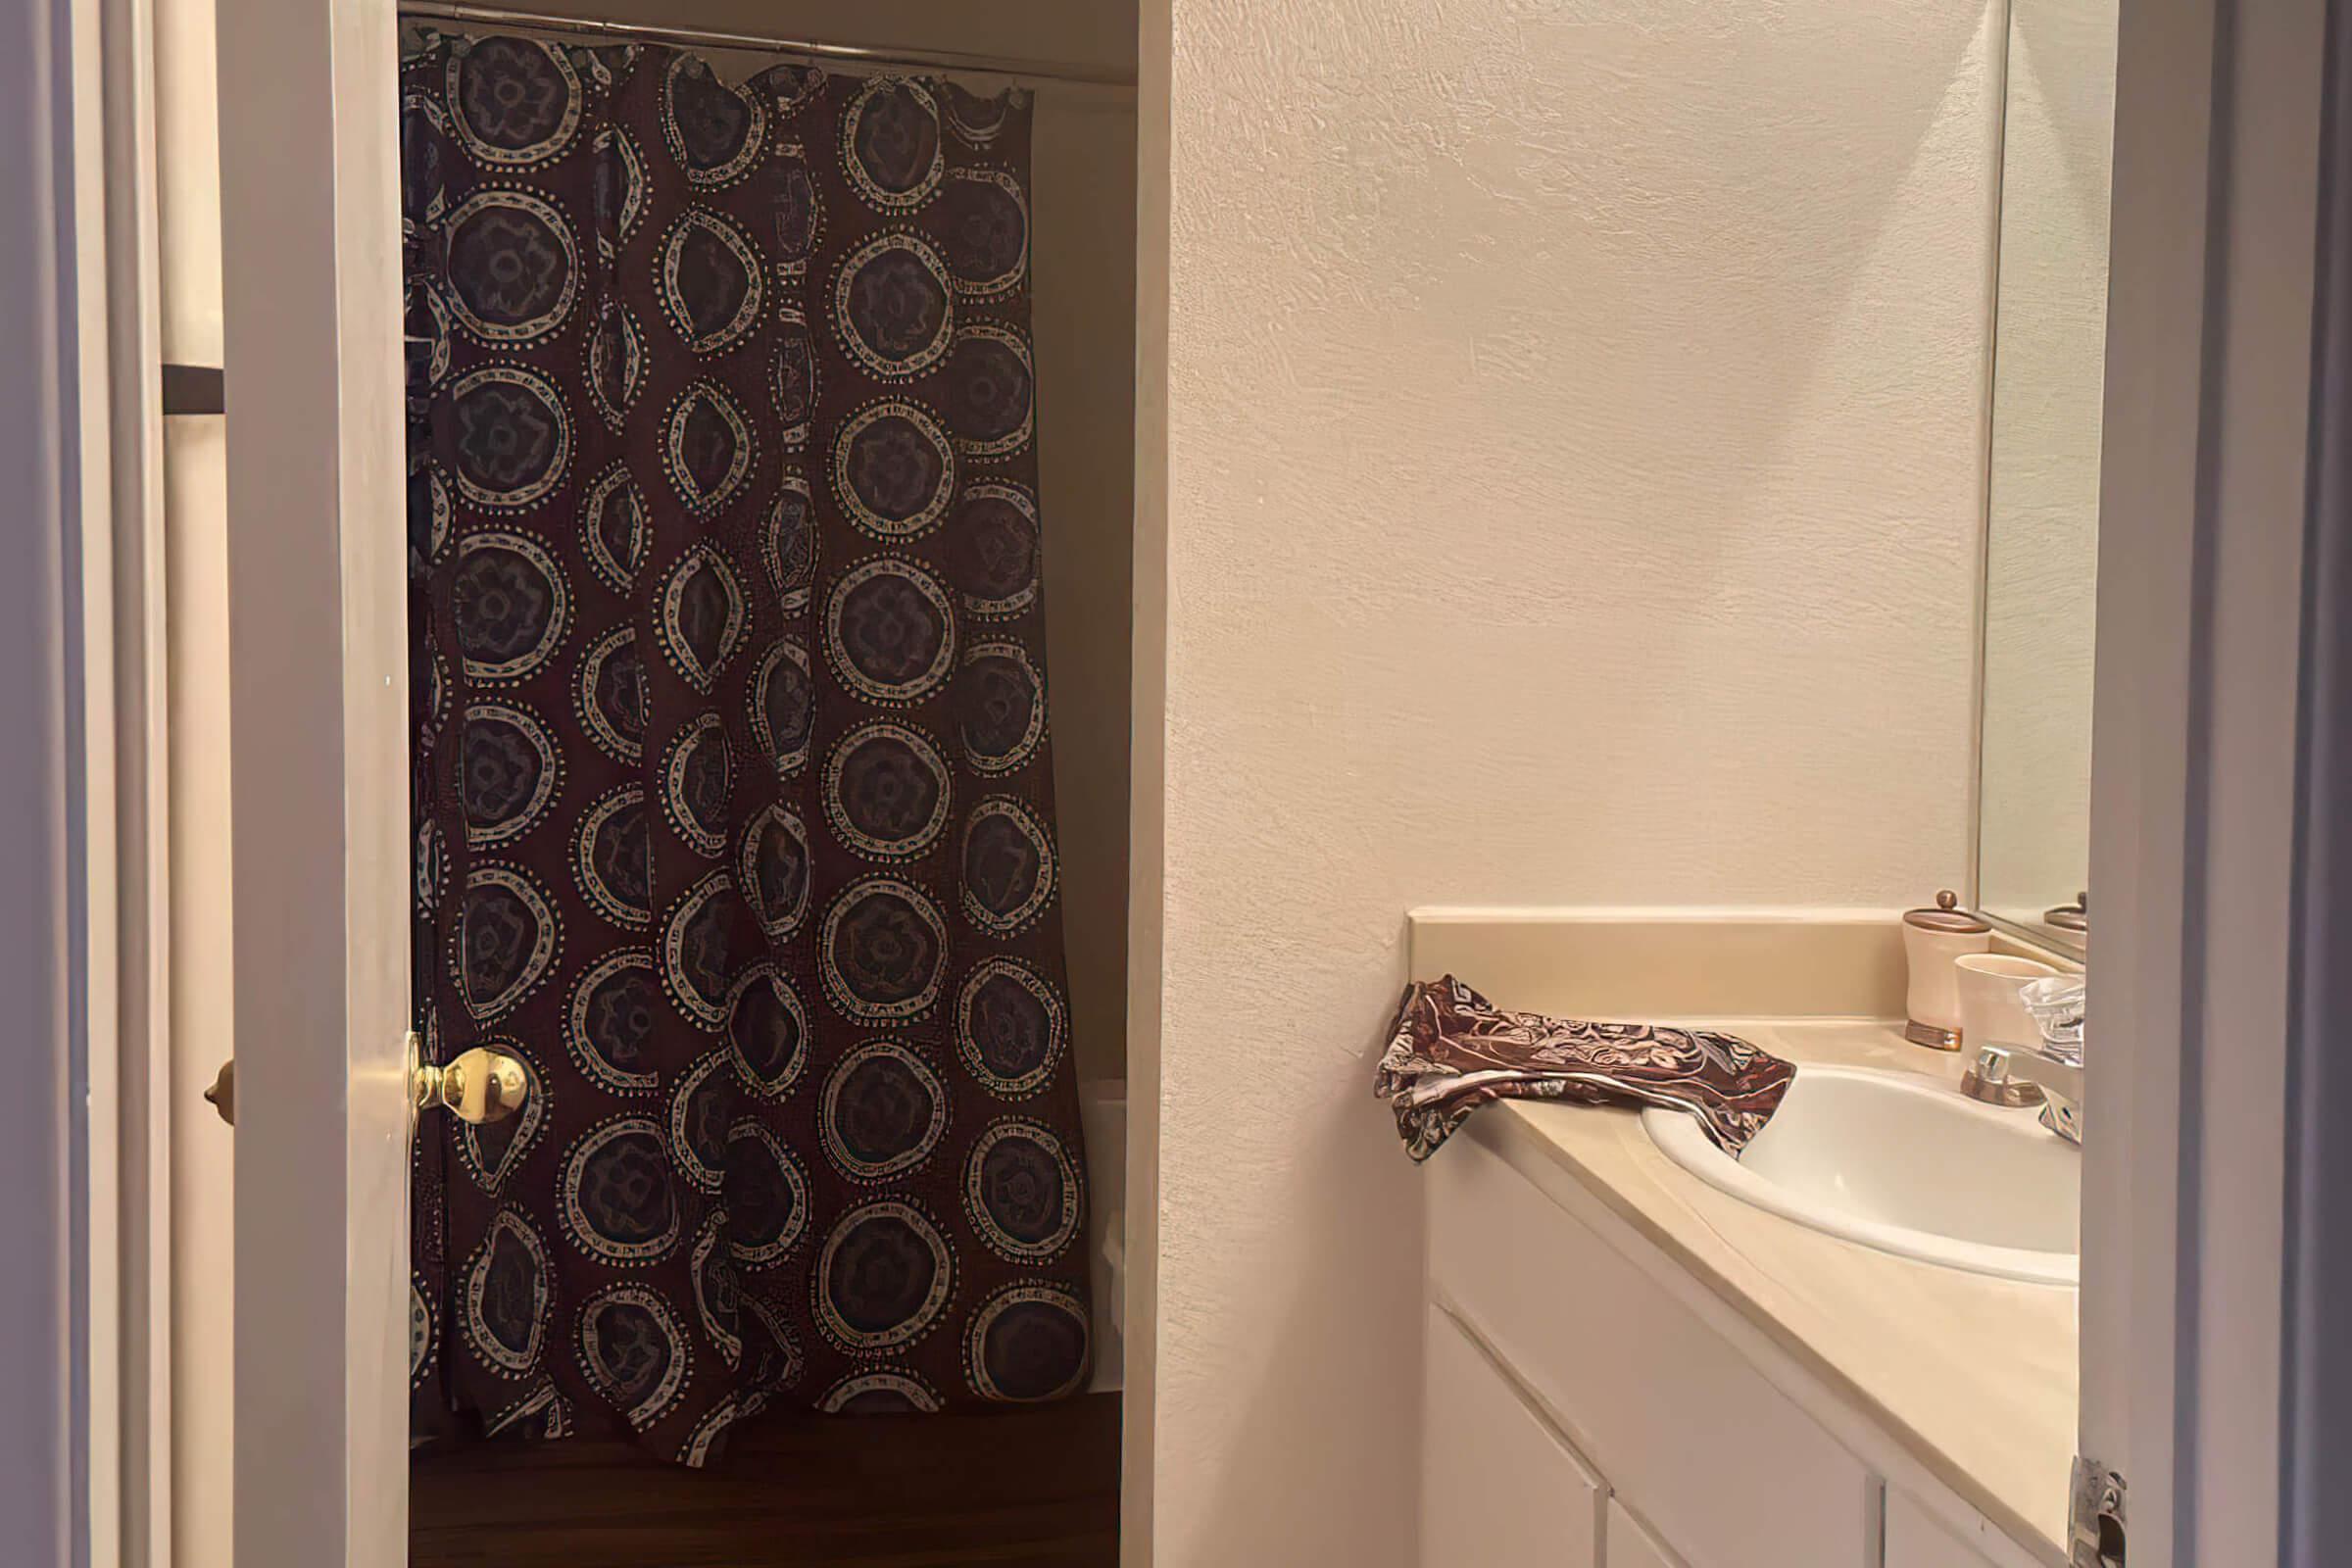 a shower curtain next to a door